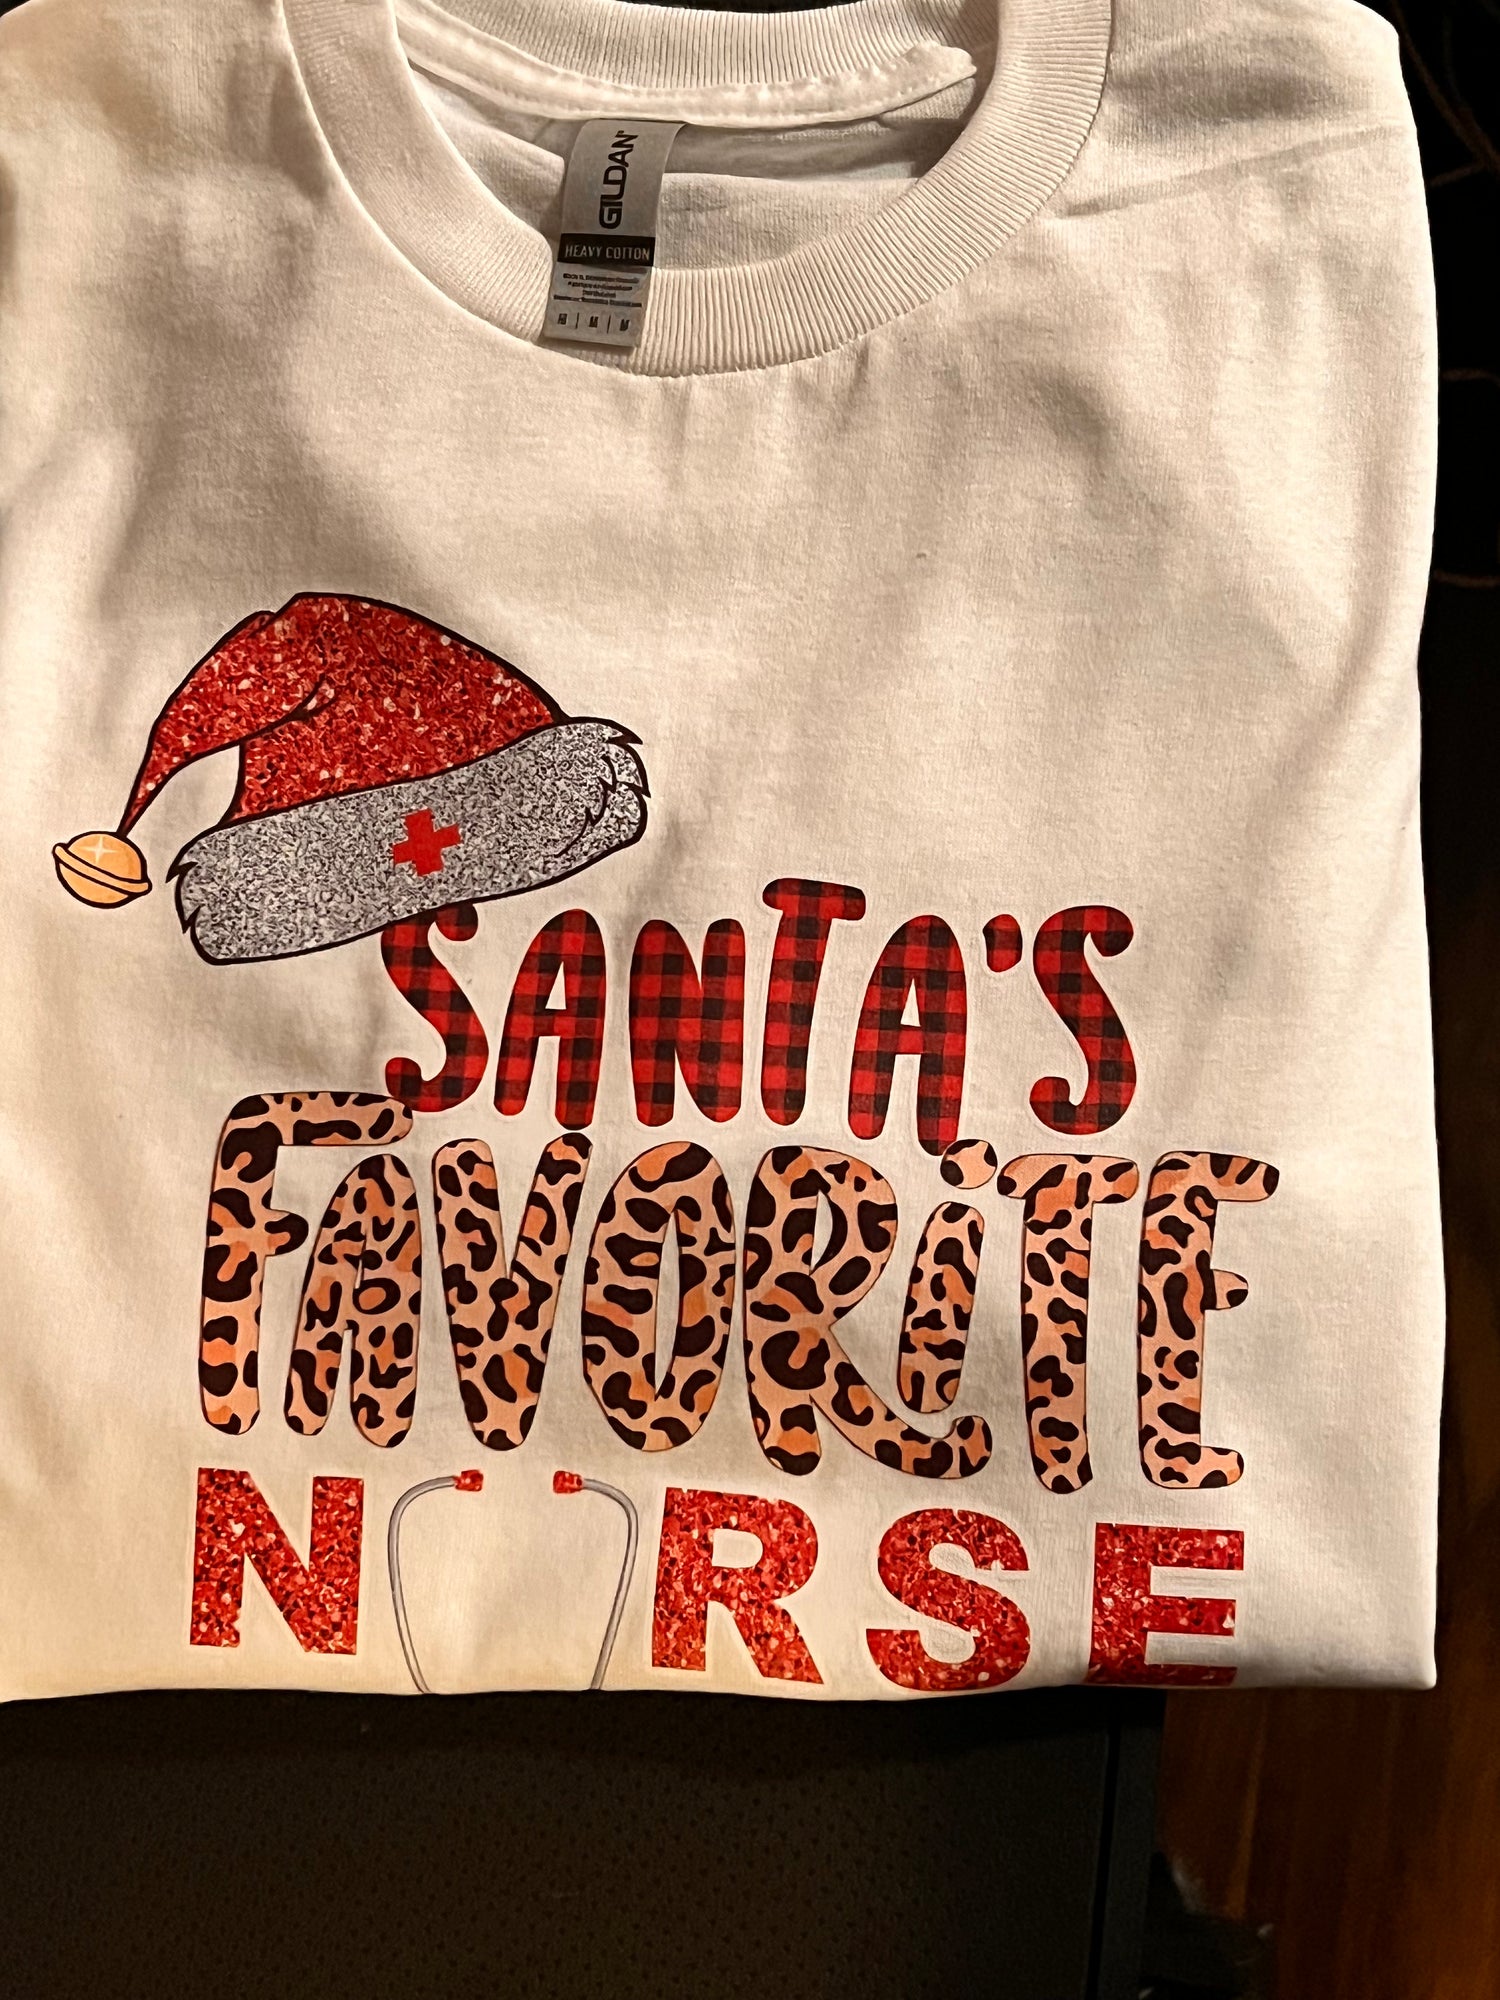 T-Shirt with Santa’s Favorite Nurse Design